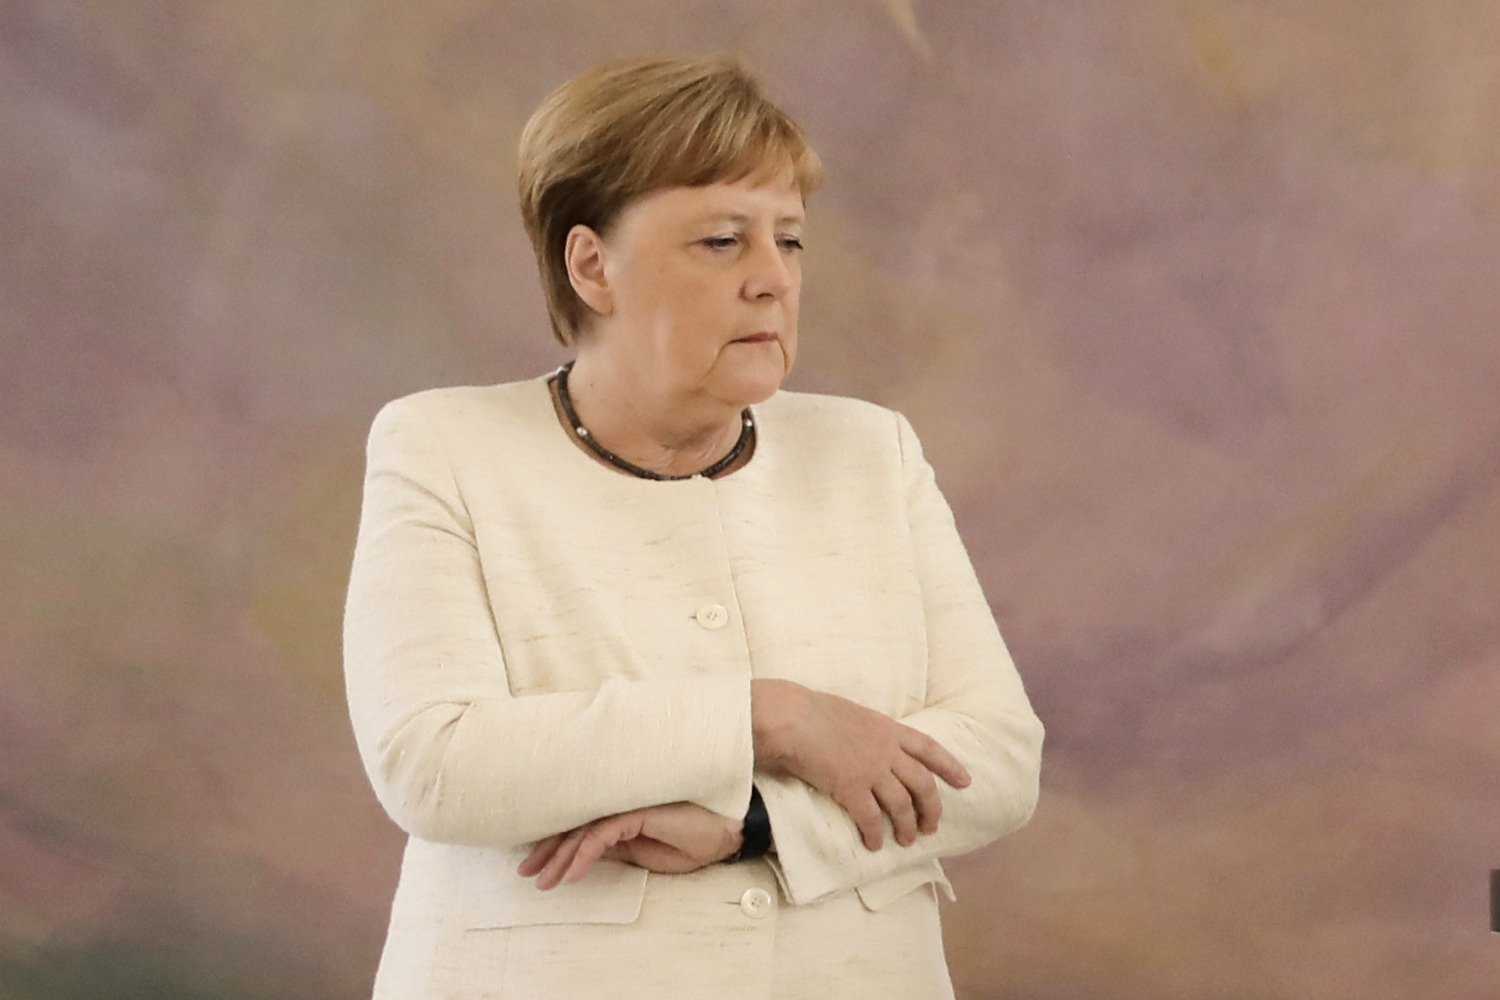 Angela Merkel at Thursday's event in Berlin. Photo: DPA